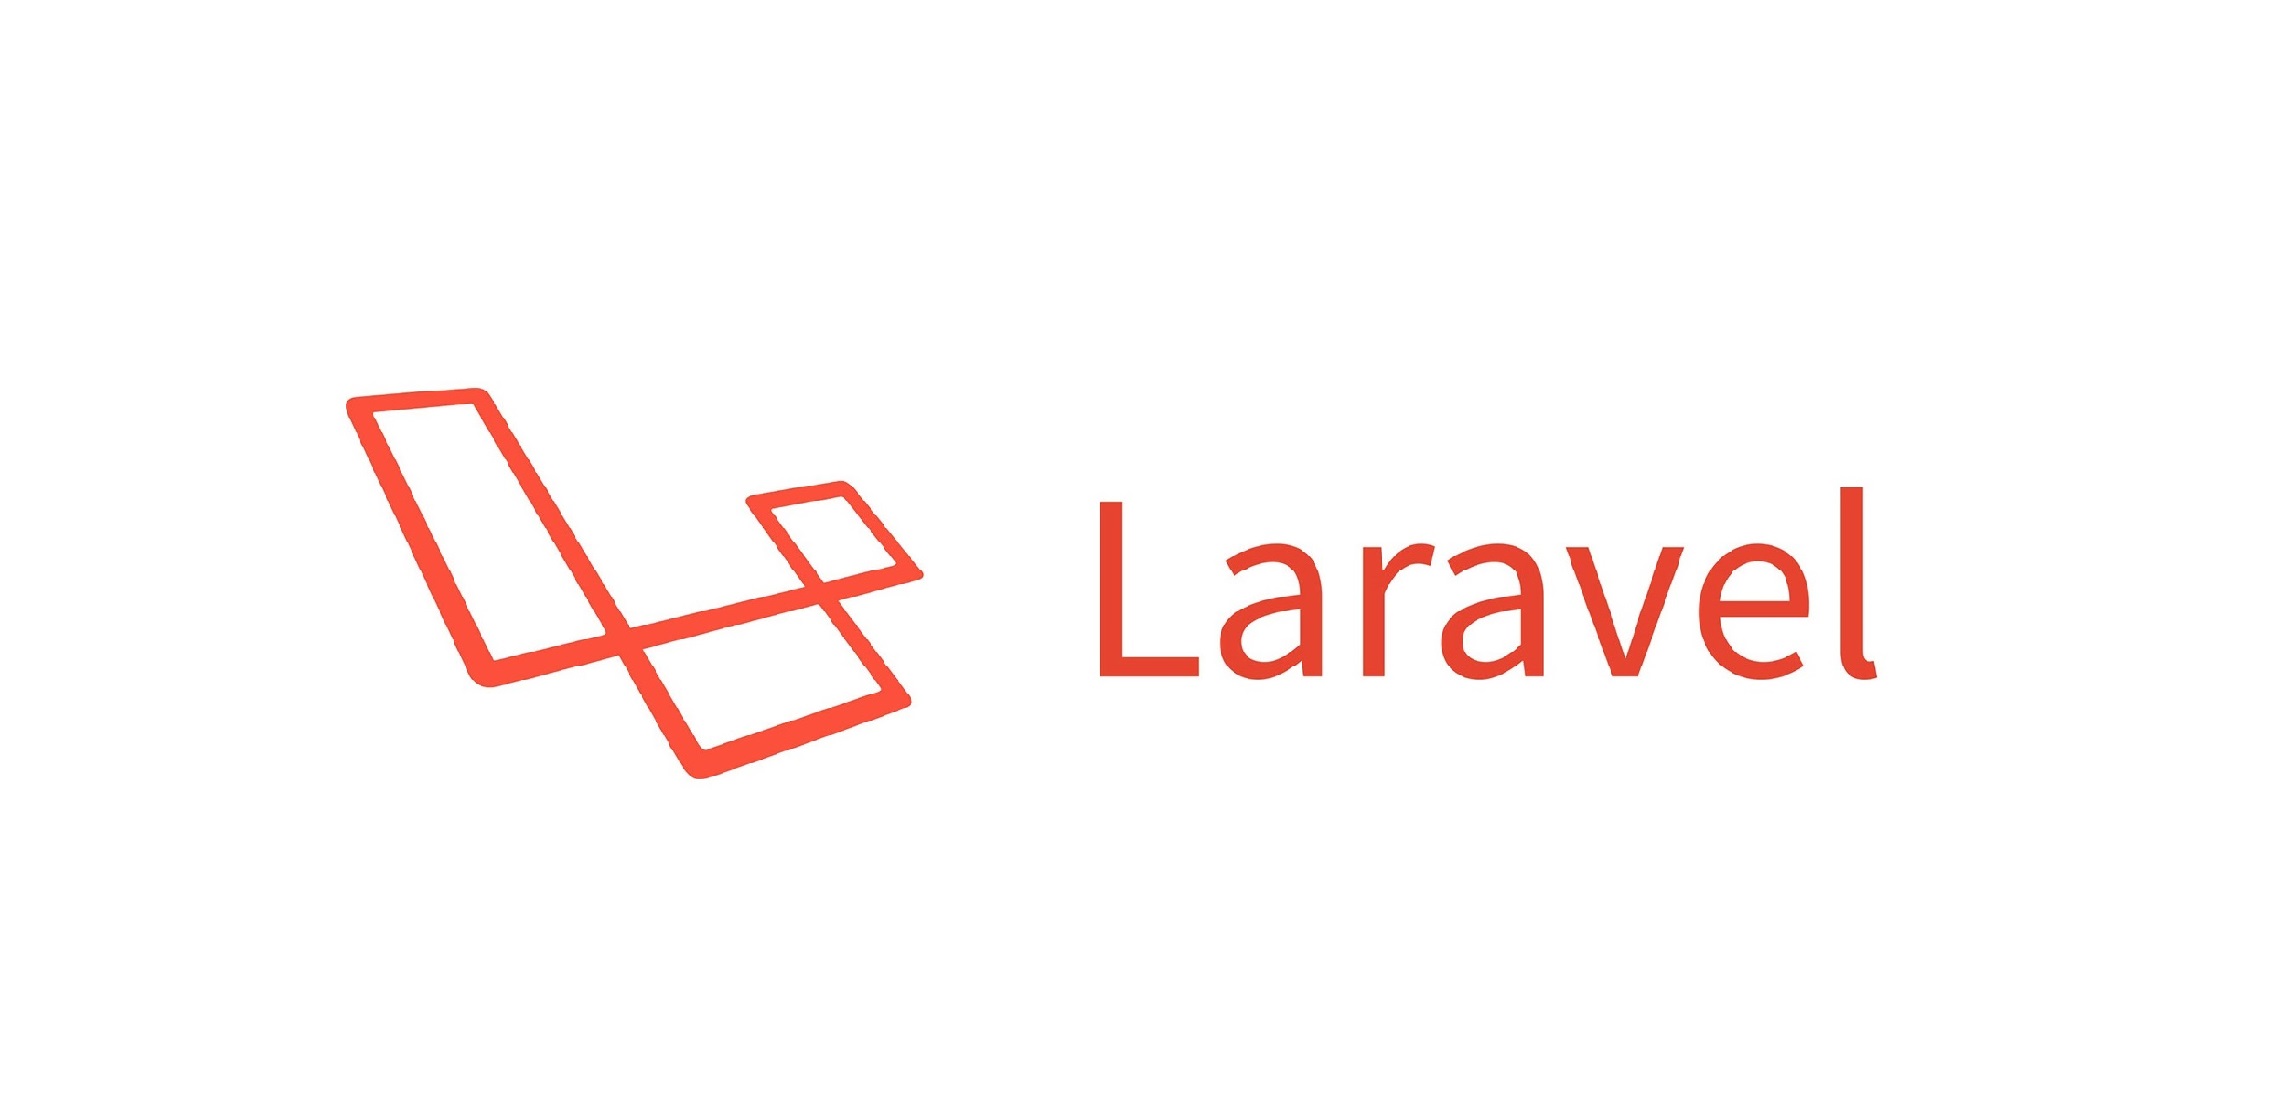 Laravel загрузка изображений